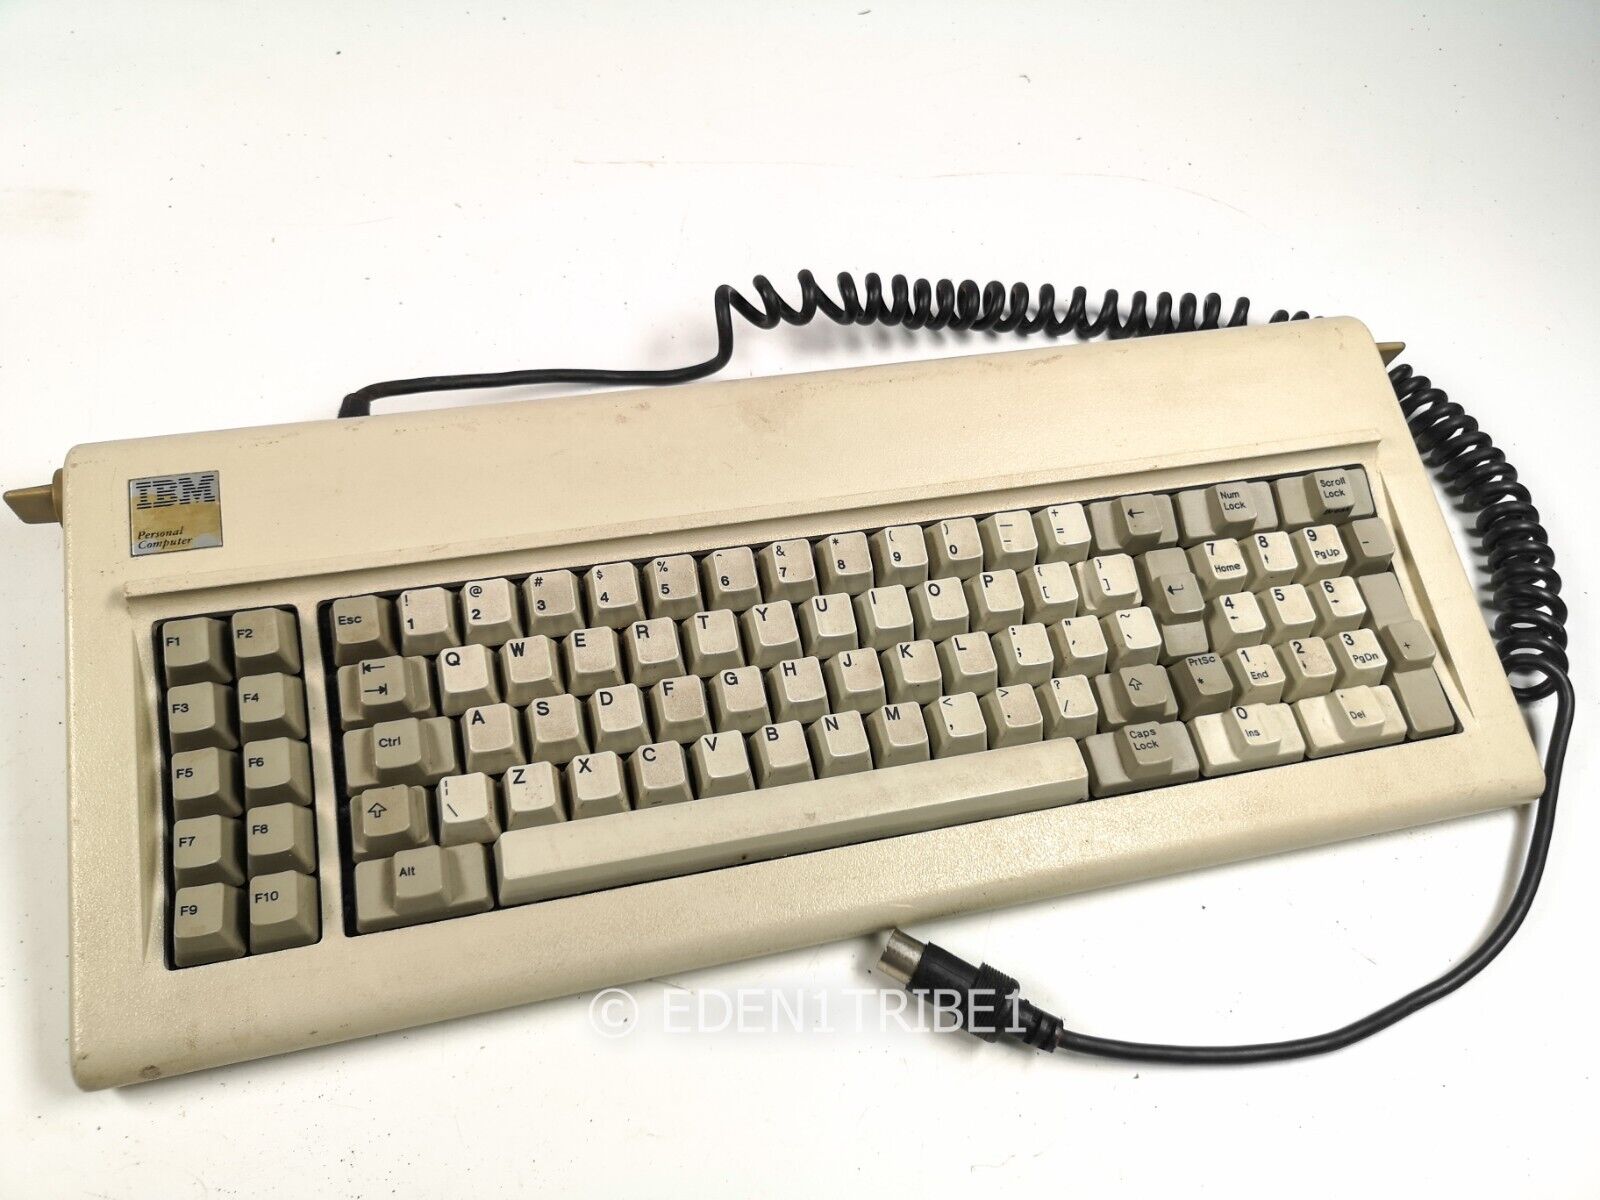 Vintage IBM Part # 4584656 Model F Collectible Keyboard Tested Works